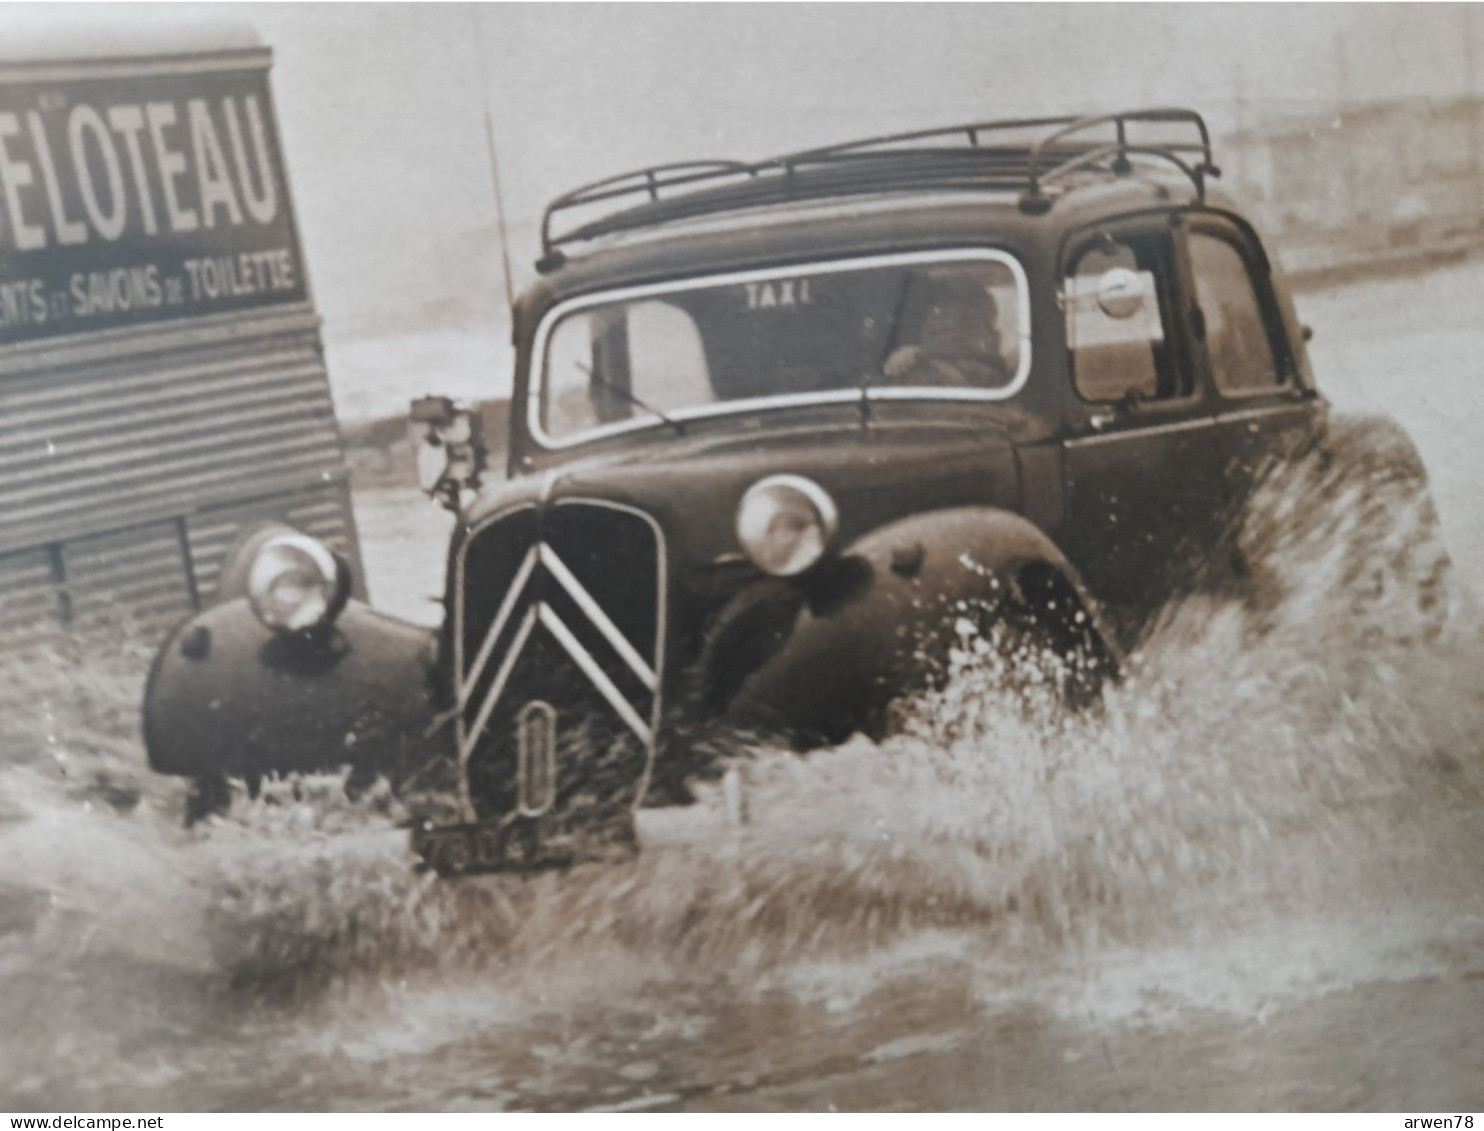 Photo MARSEILLE CANEBIERE INONDATION CITROEN H SAVON GABELOTEAU  TAXI TRACTION AVANT 1959 - Cars